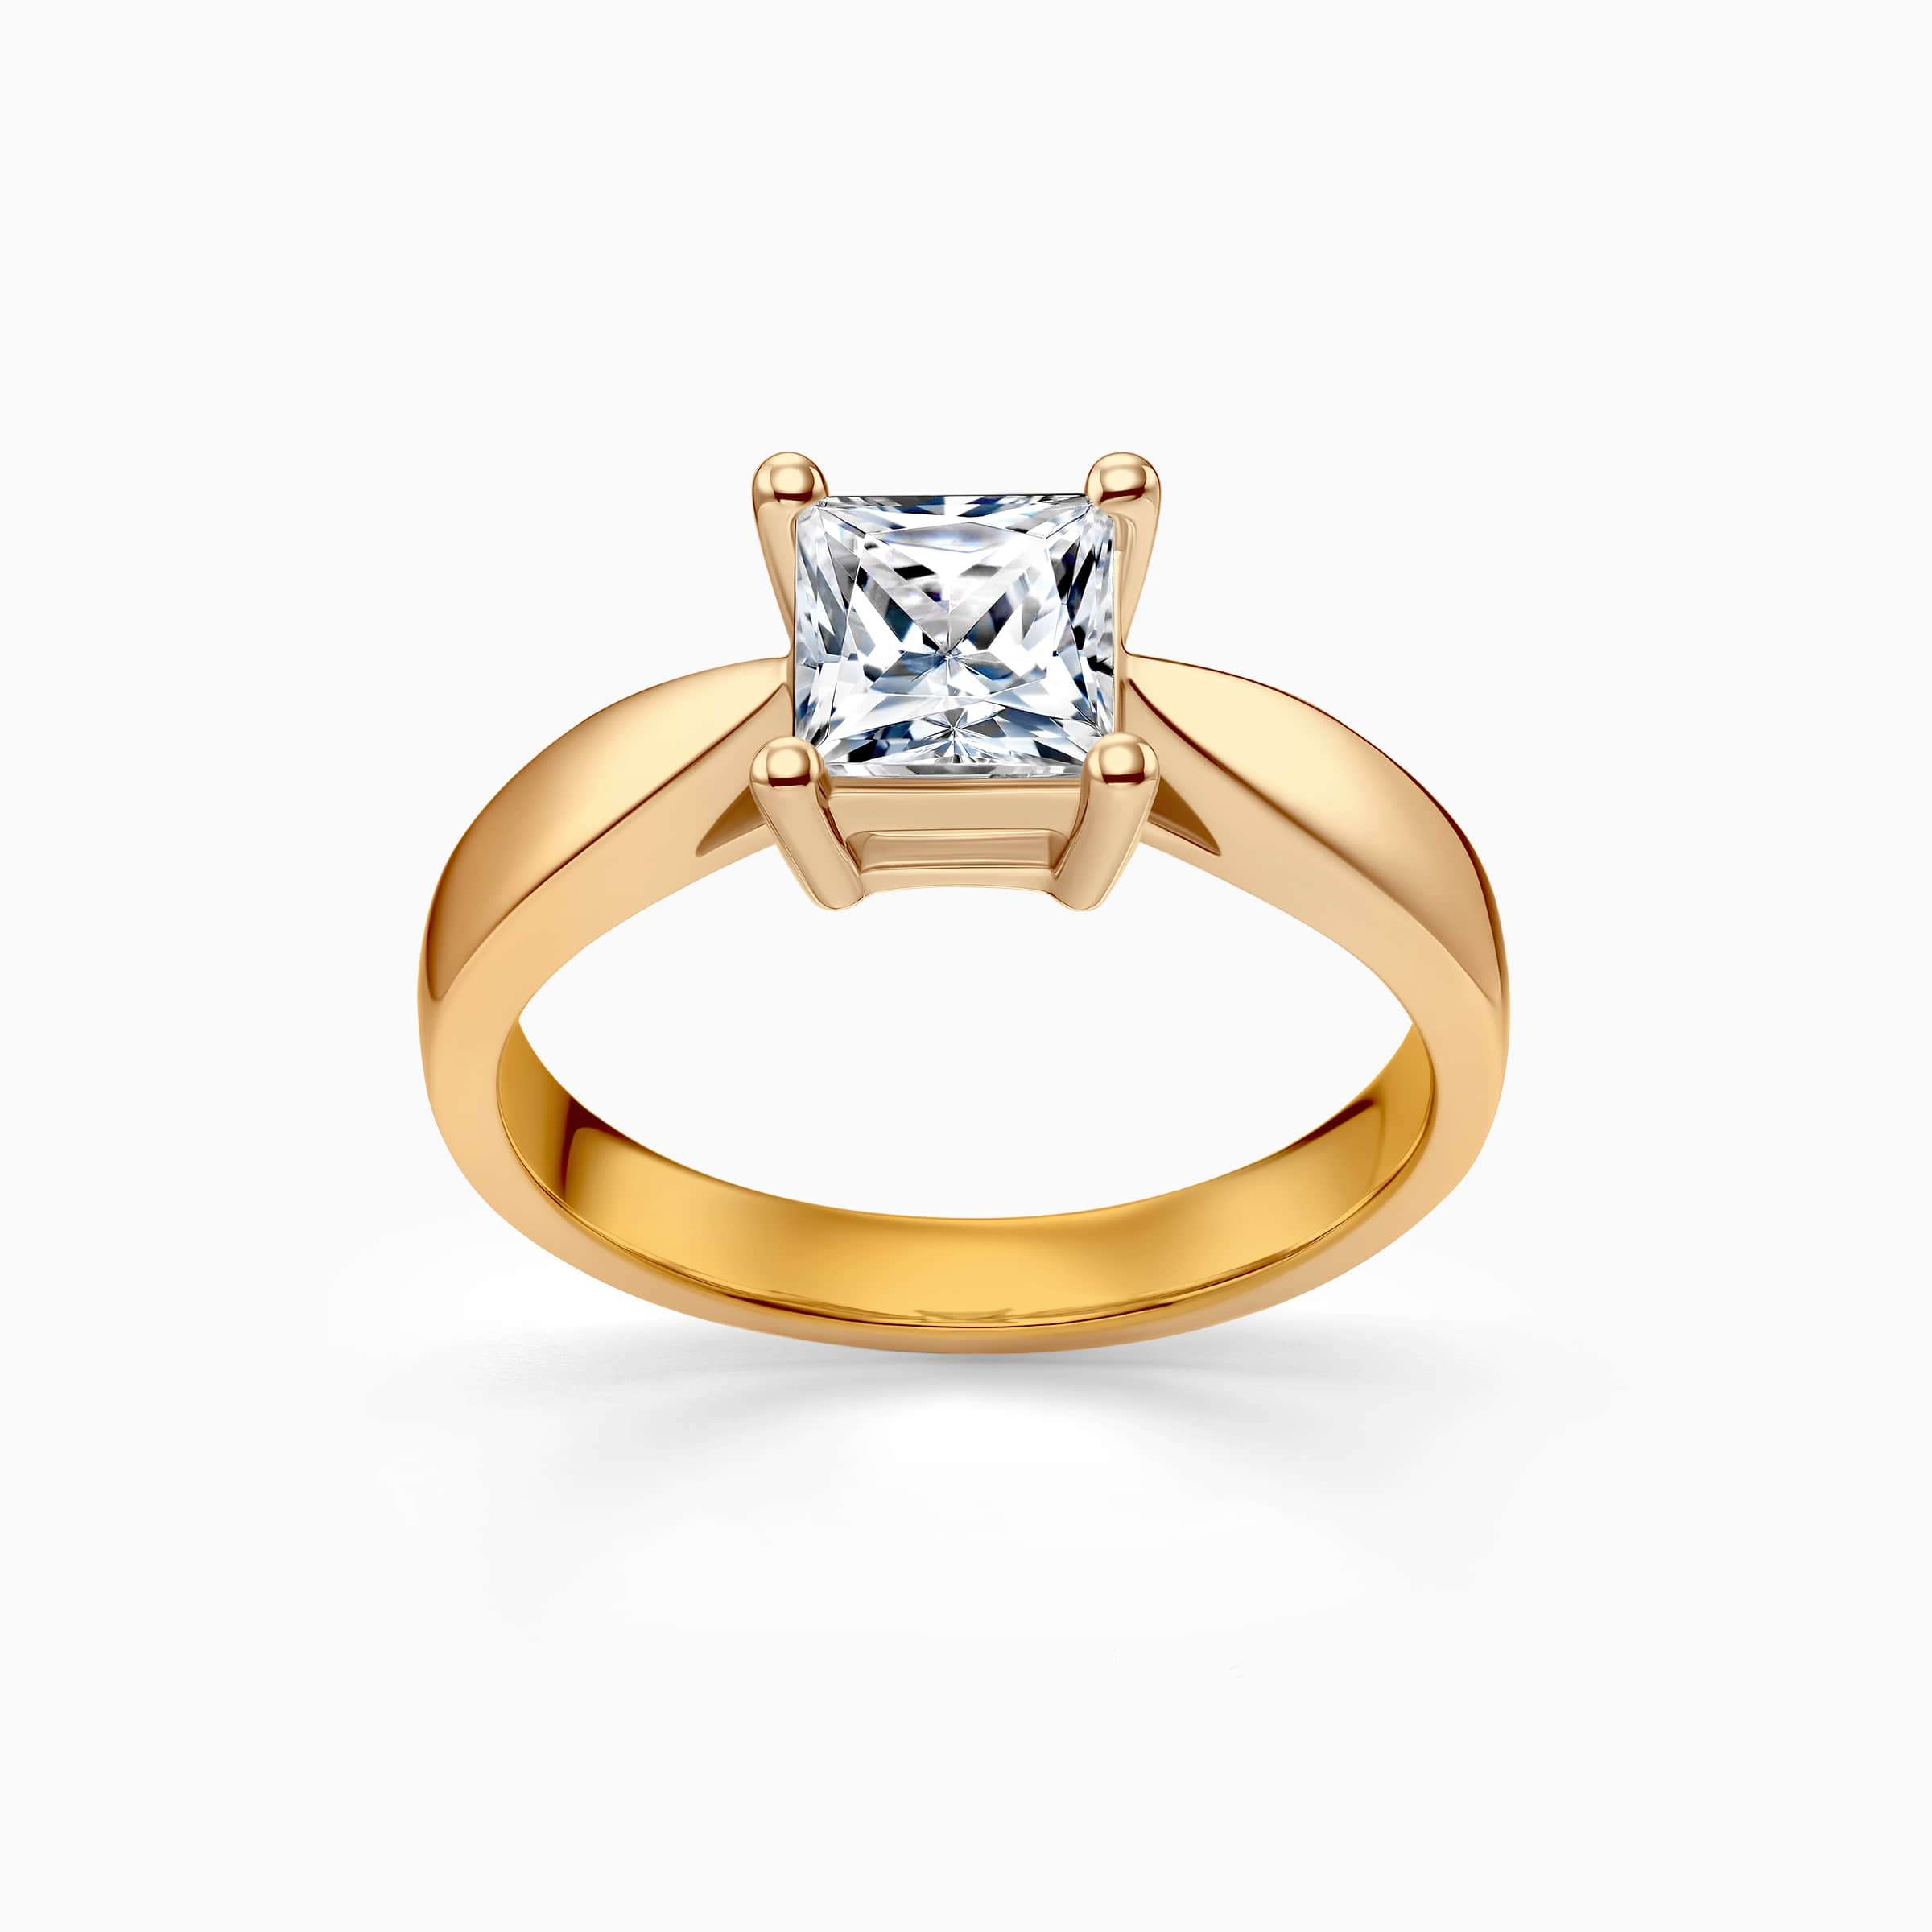 Celebrity Ring: Lauren Sanchez's Engagement Ring - DR Blog